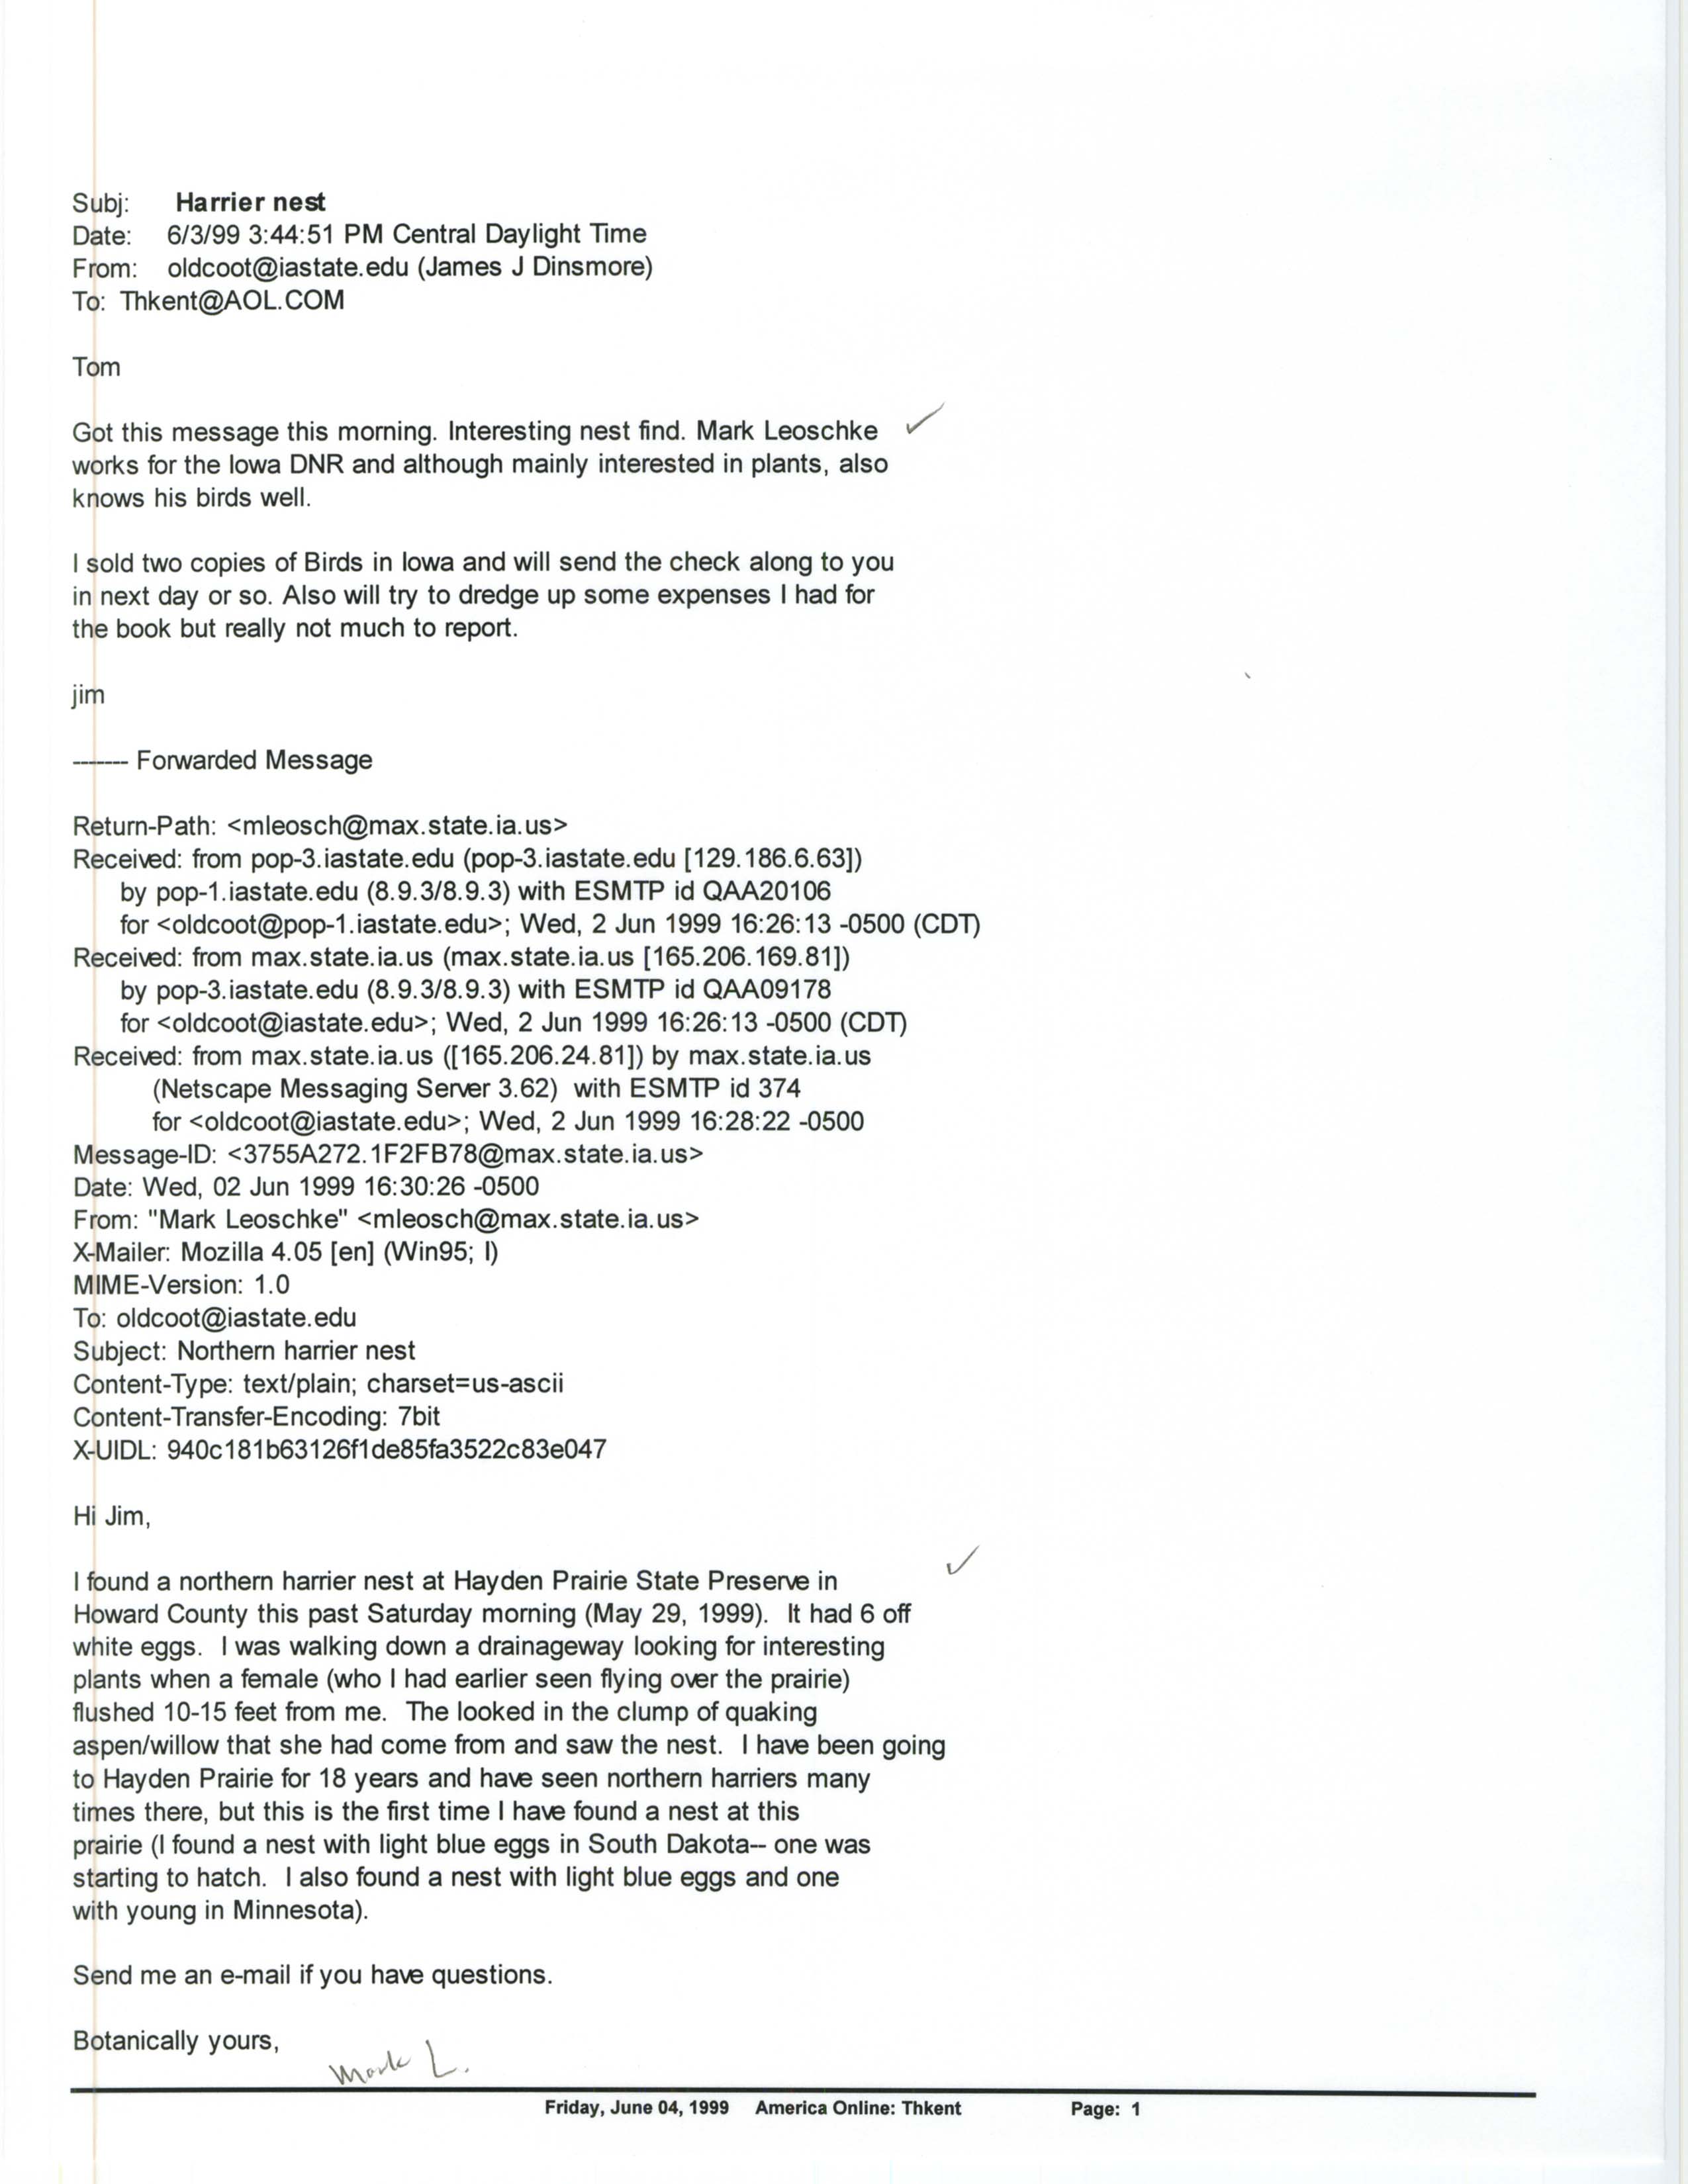 Jim Dinsmore email to Thomas Kent regarding Harrier nest, June 3, 1999